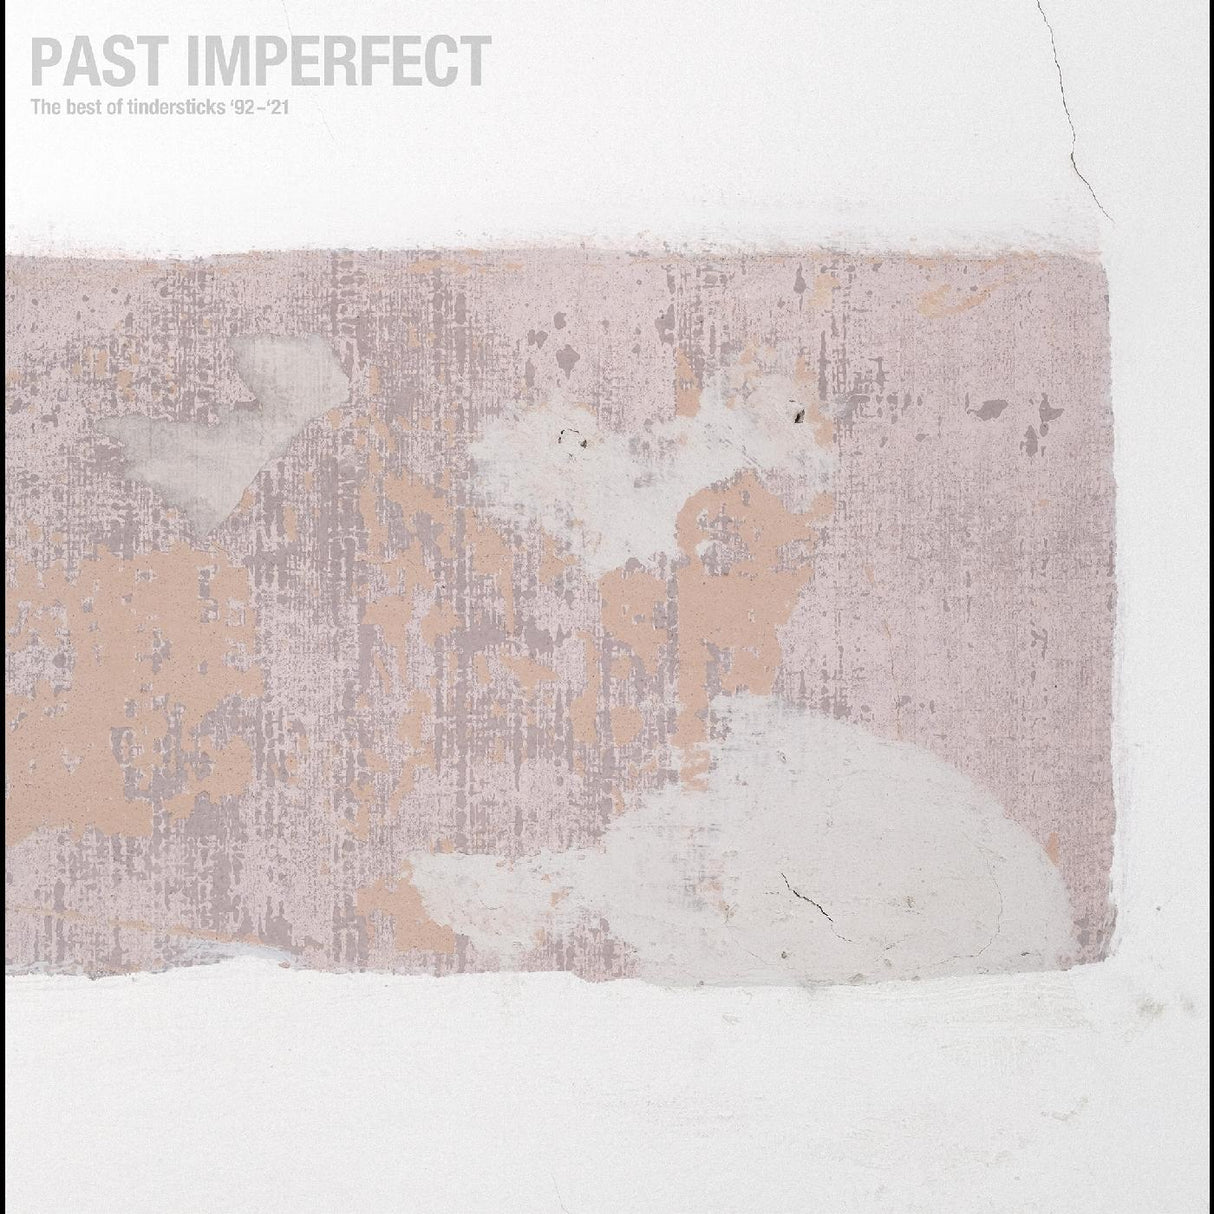 PAST IMPERFECT the best of tindersticks ‚Äô92 - ‚Äô21 [CD]